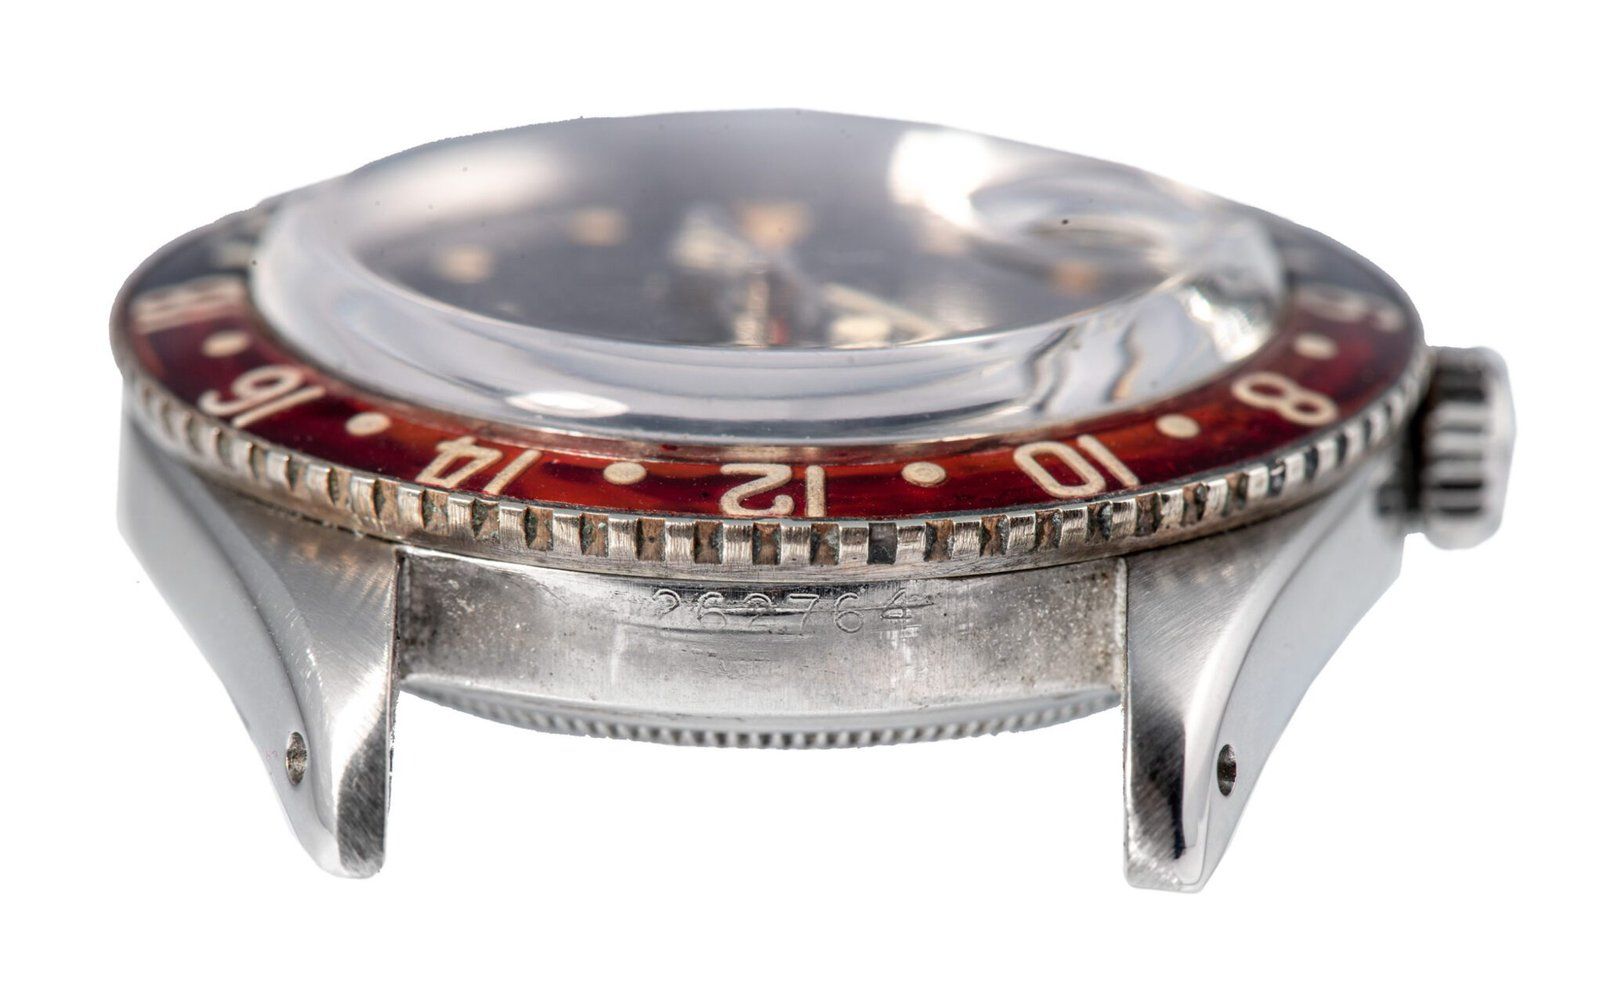 Antiquorum Presents Important Modern Vintage Timepieces At The Geneva Auction